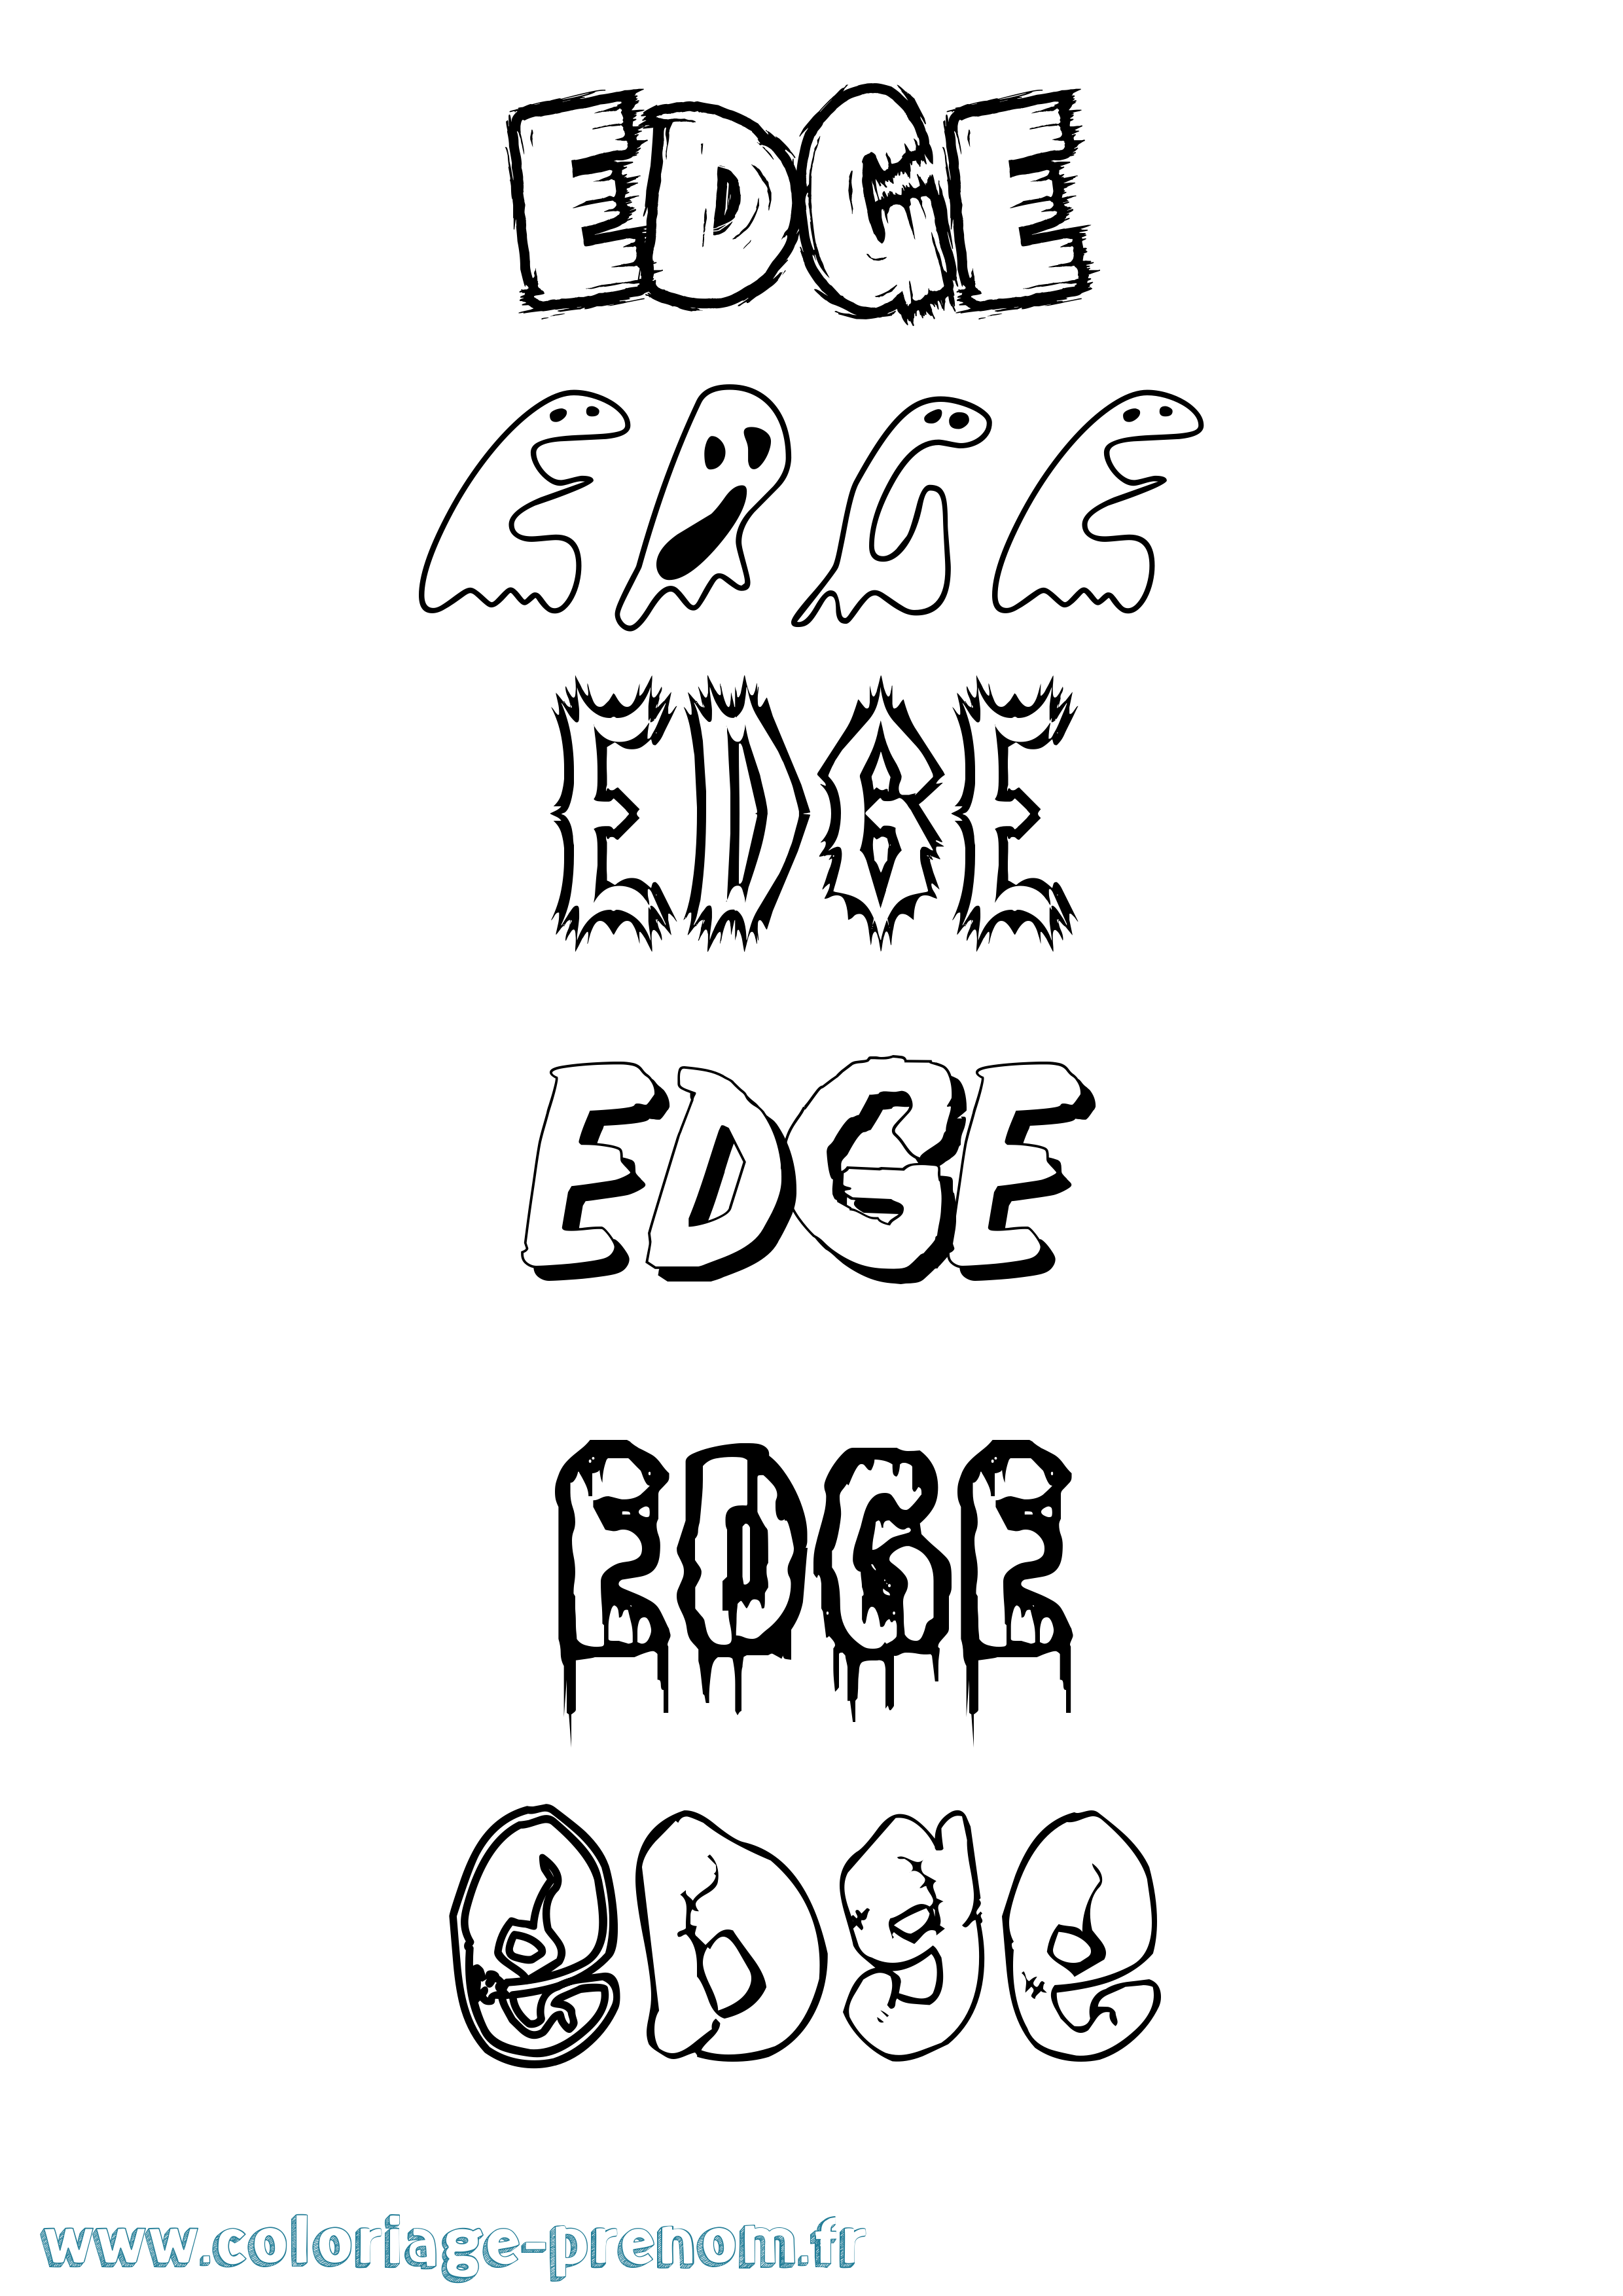 Coloriage prénom Edge Frisson